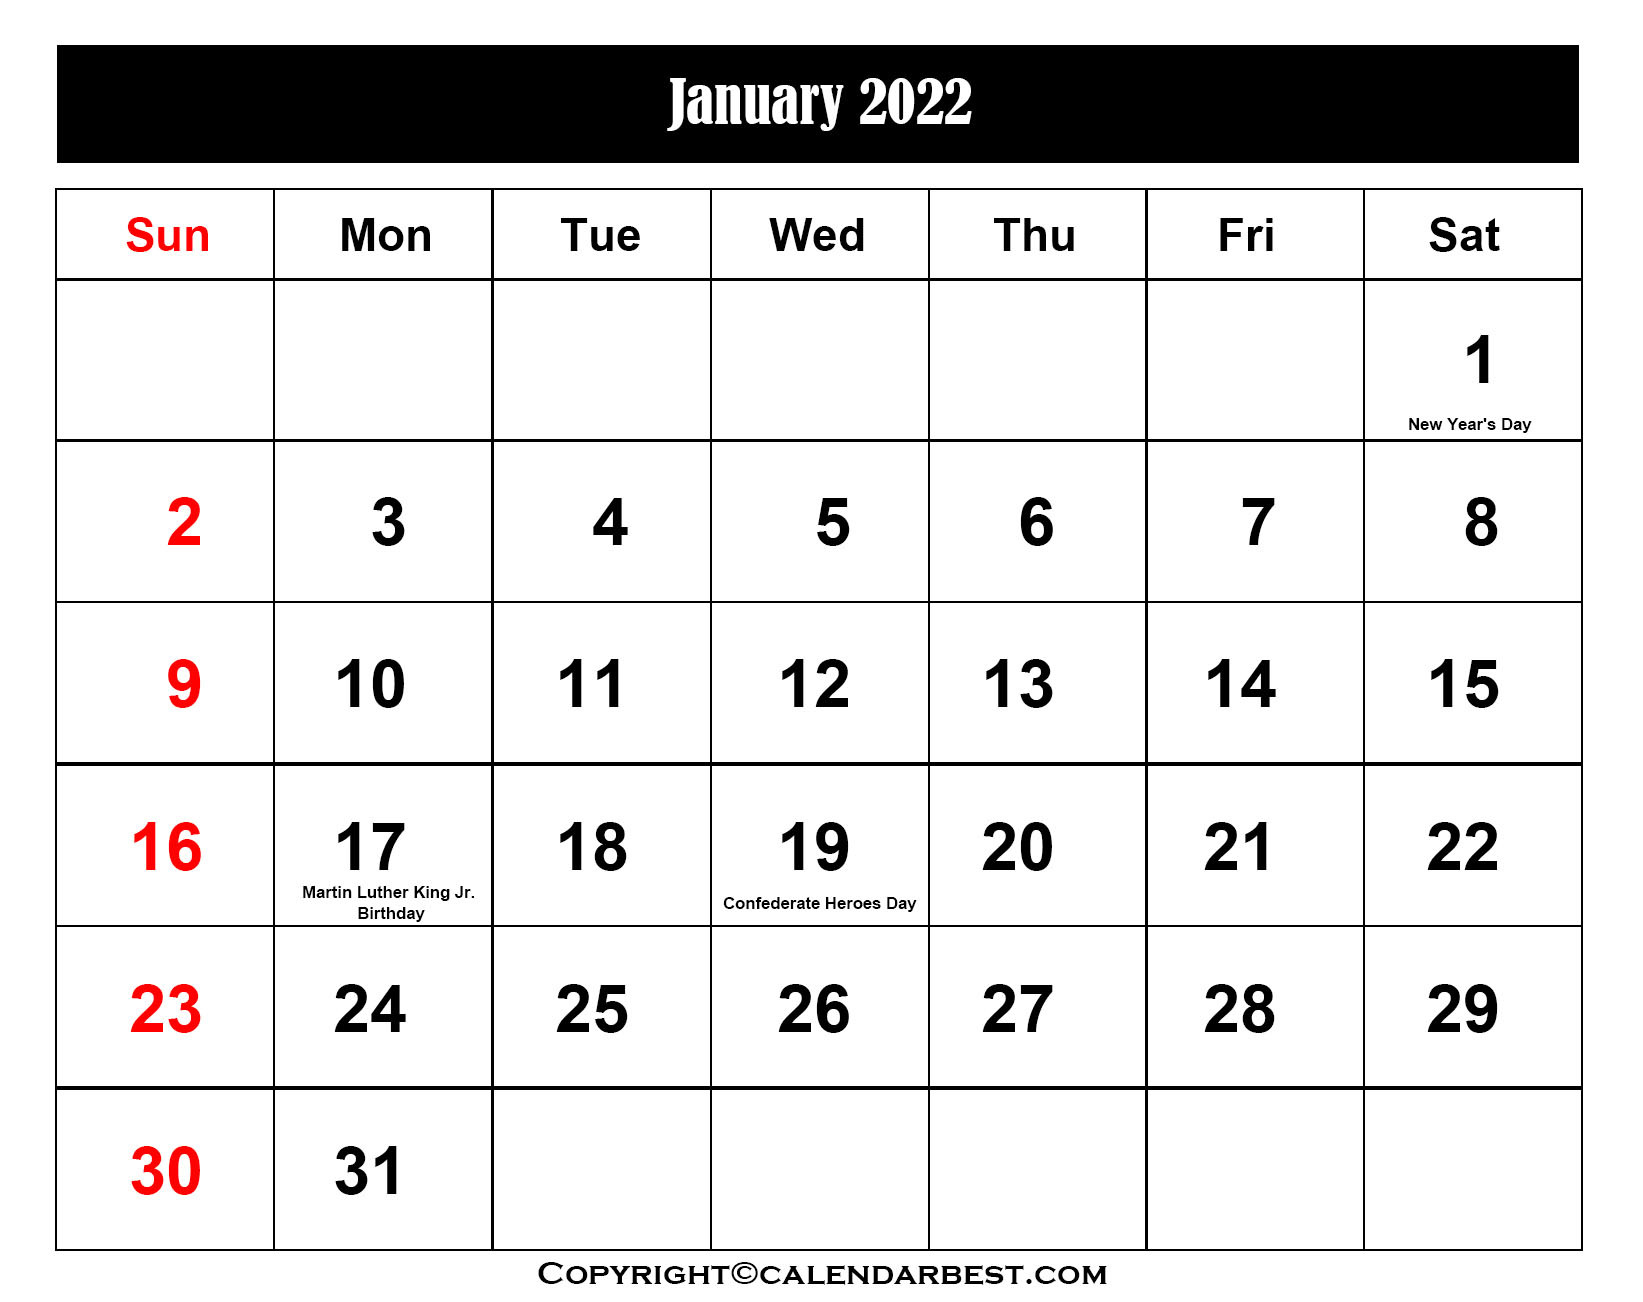 Free Printable January Calendar 2022 With Holidays  October 2022 To January 2022 Calendar